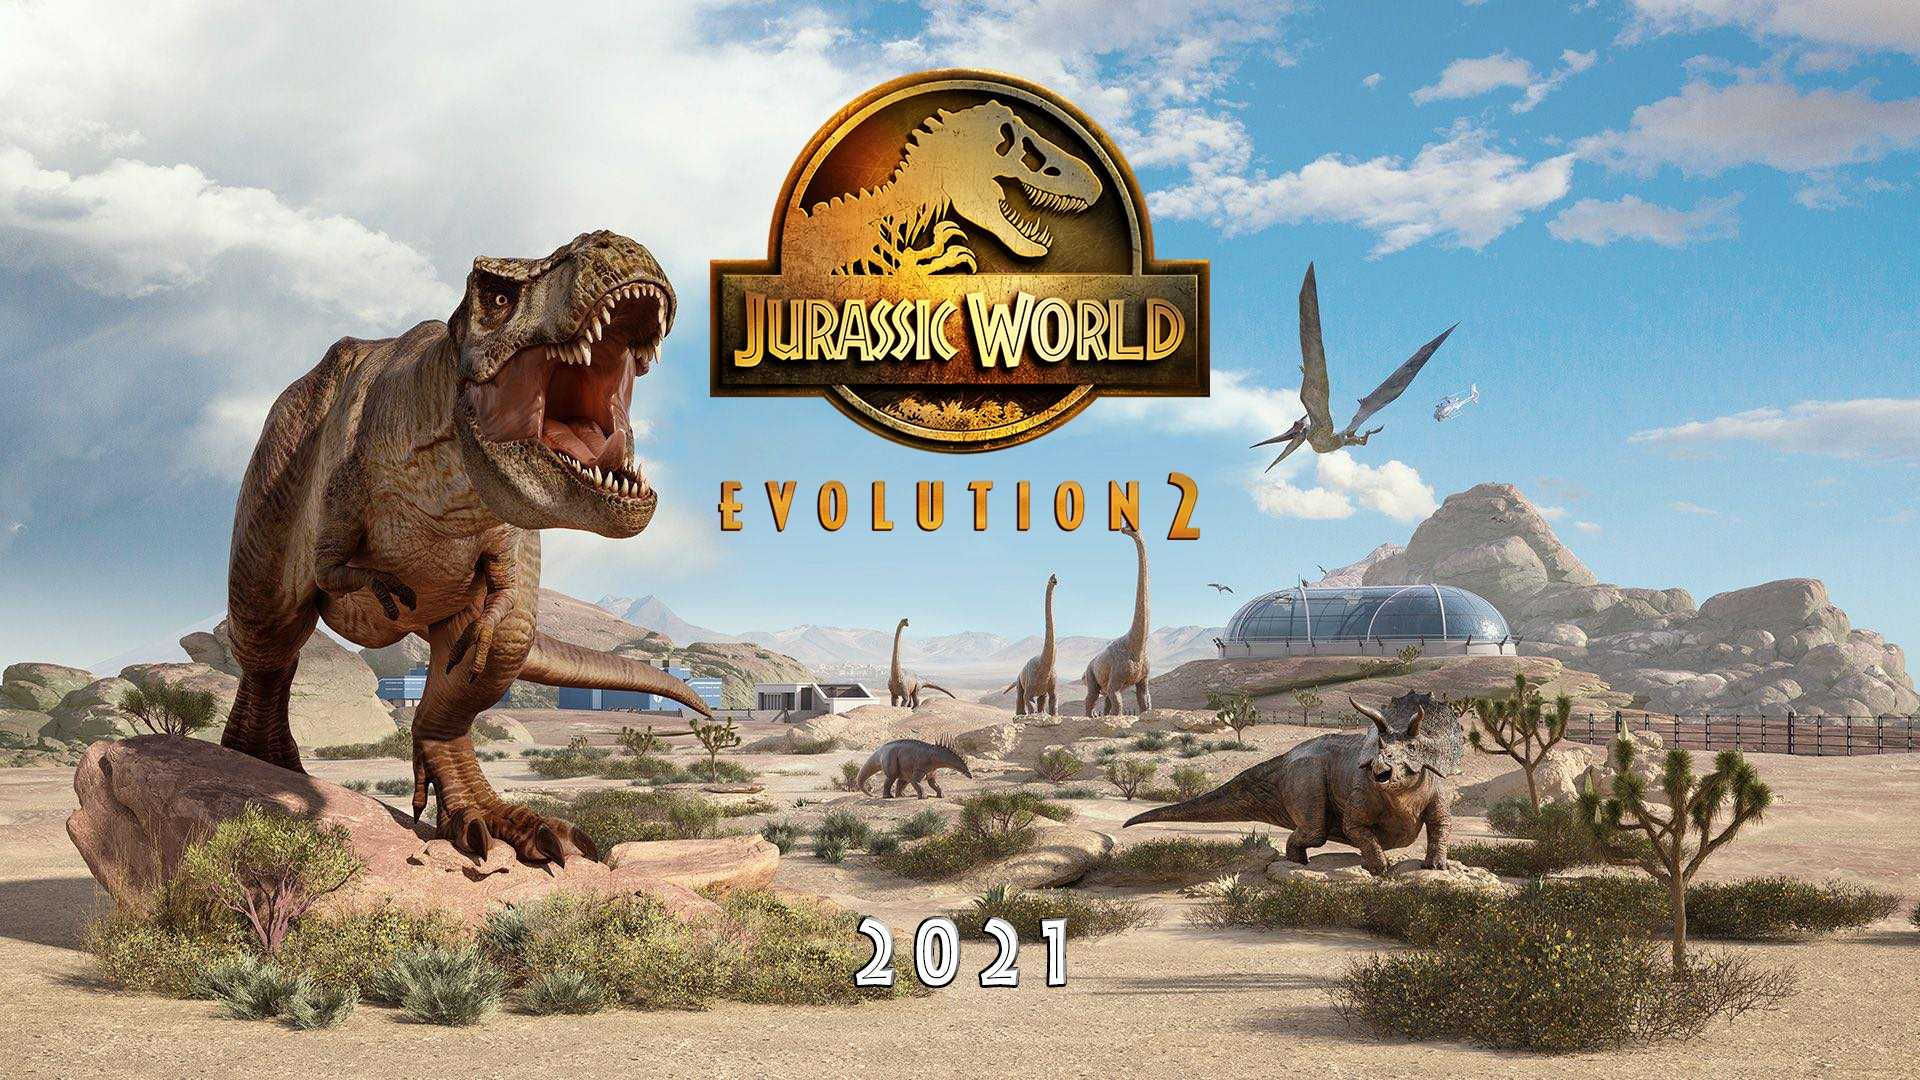 for ipod download Jurassic World: Dominion